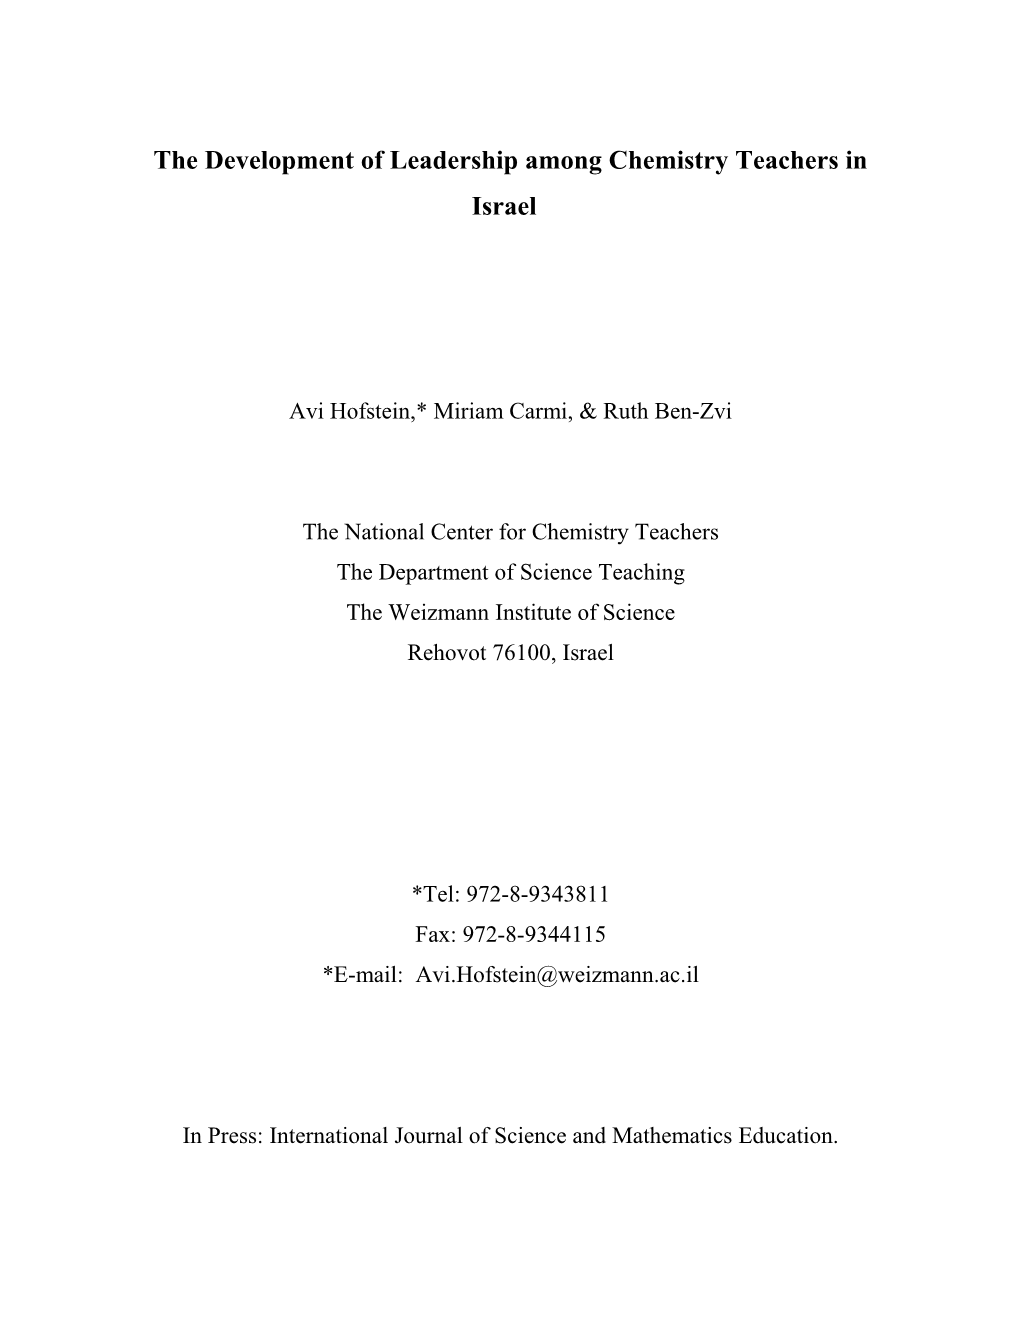 The Development of Leadership Among Chemistry Teachers in Israel